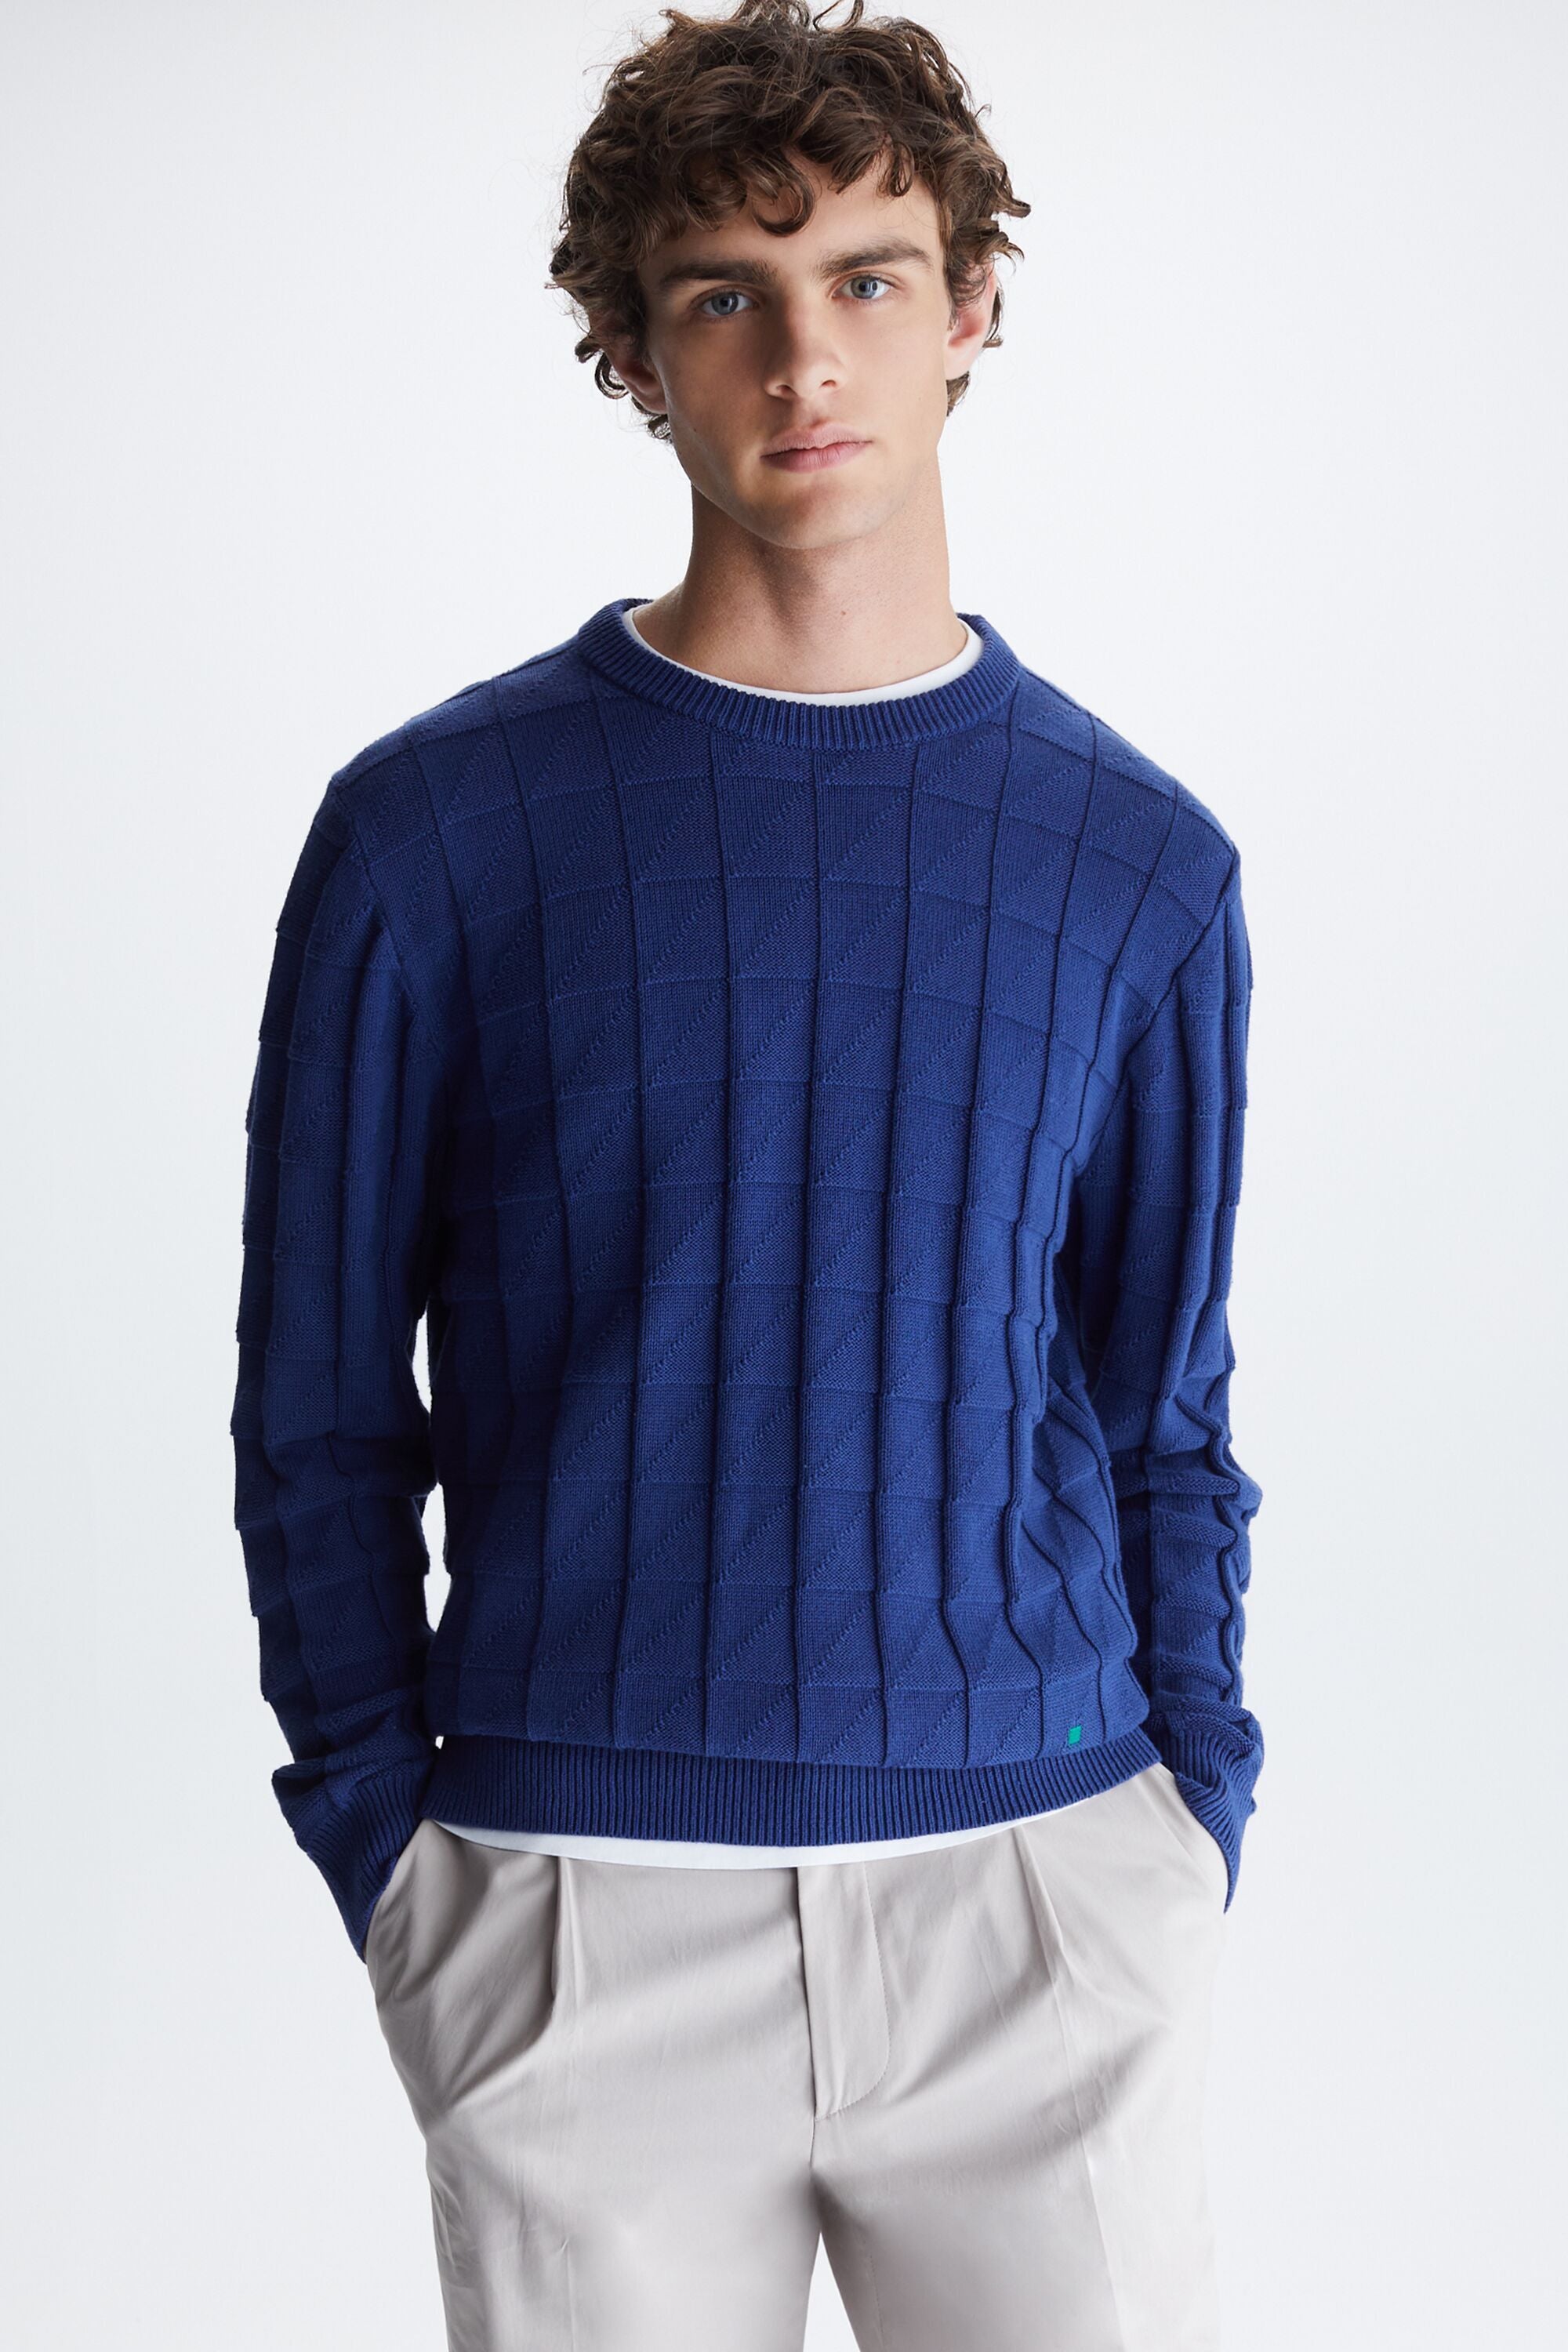 Origami structured cotton sweater grayish blue - Purificacion Garcia Denmark